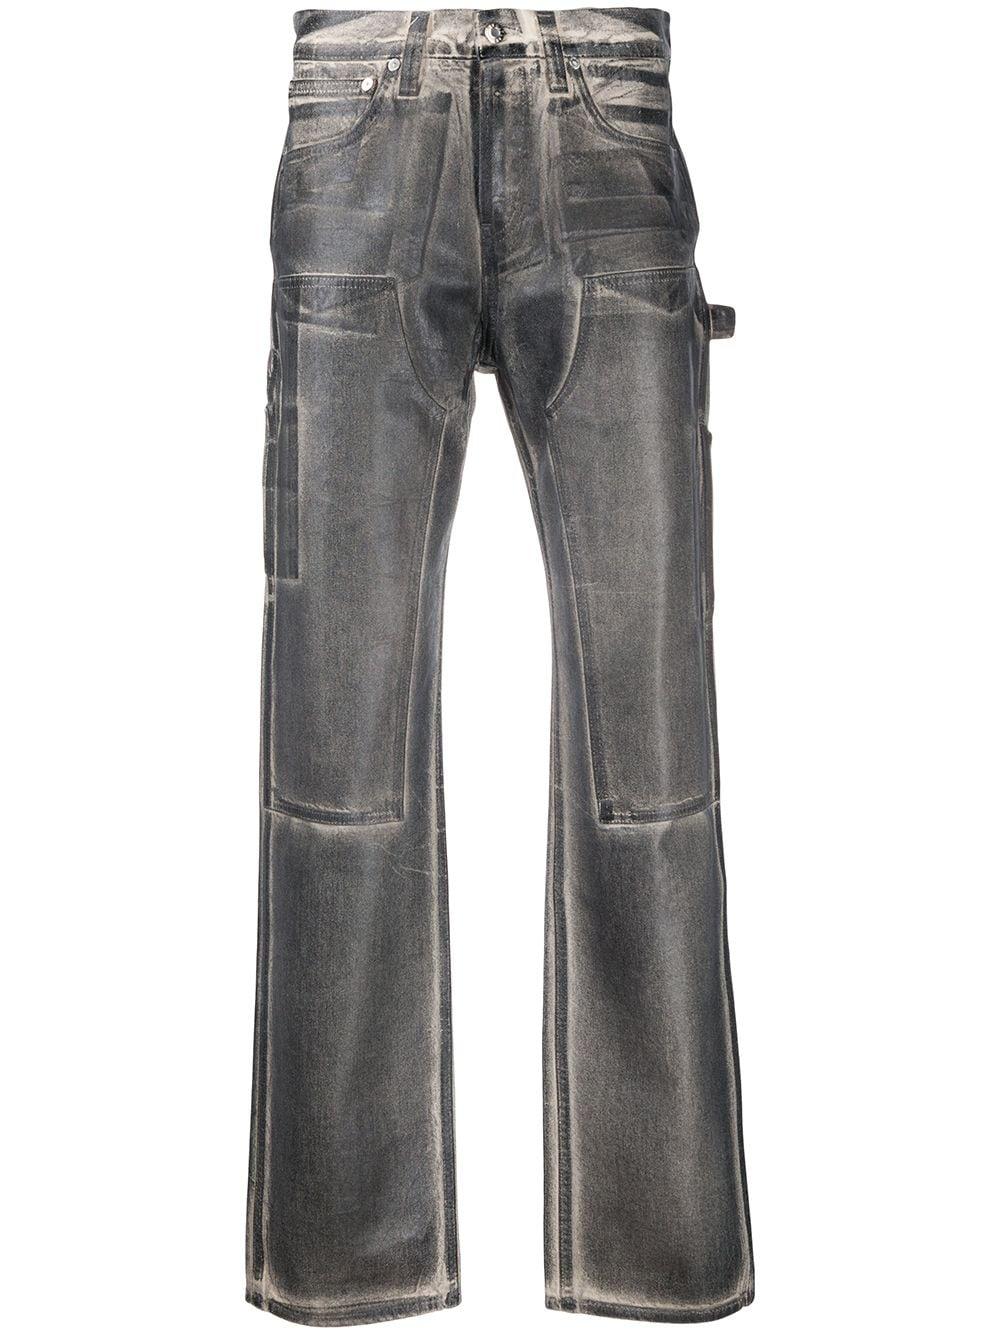 Helmut Lang Denim Paint Effect Jeans in Black for Men - Lyst